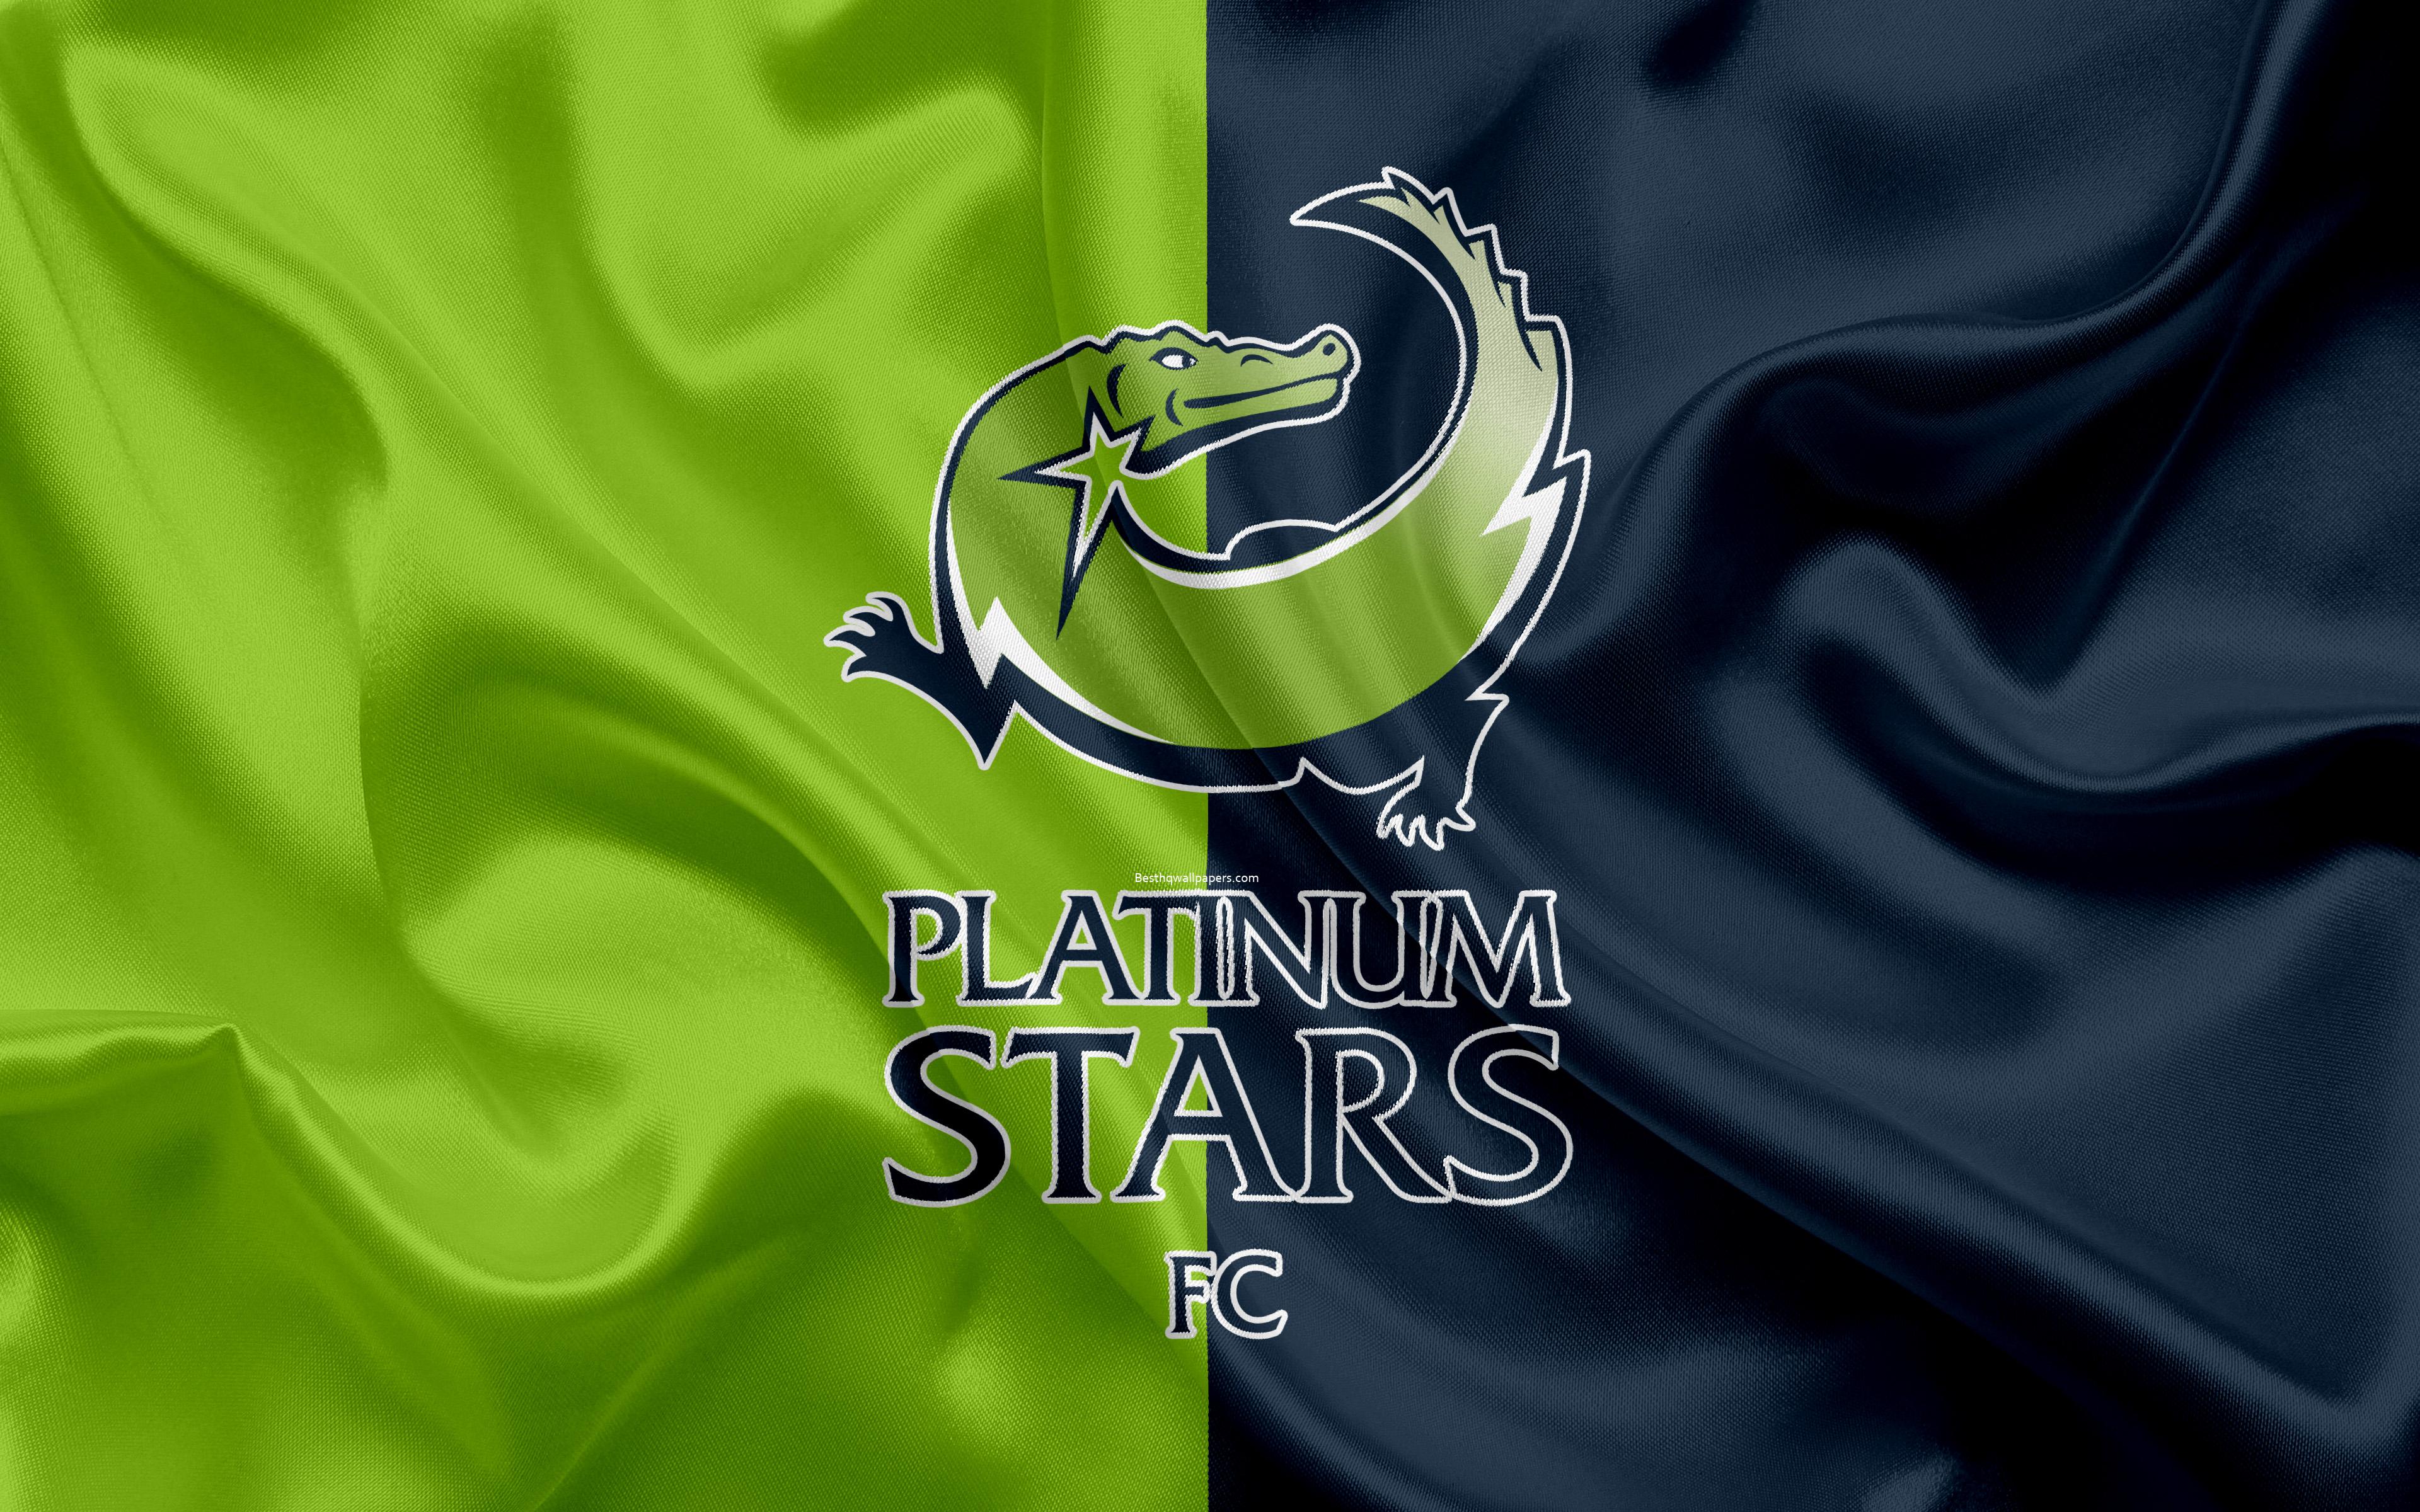 Download wallpaper Platinum Stars FC, 4k, logo, green blue silk